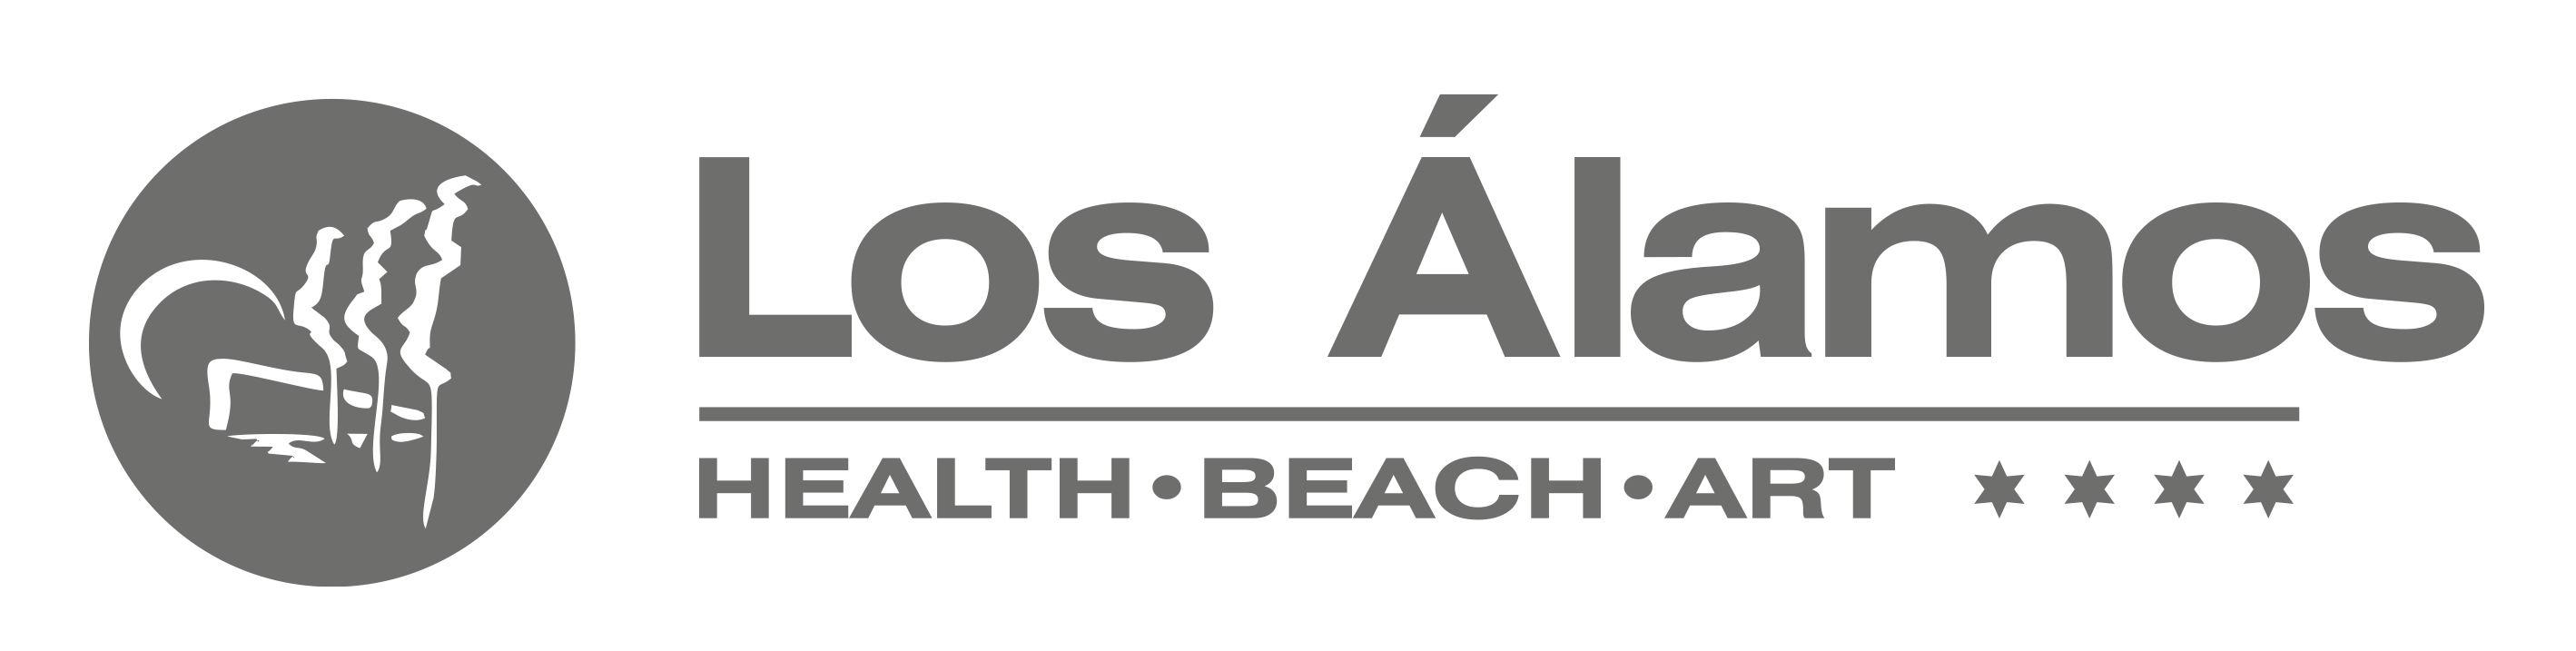 a logo for los alamos health beach art